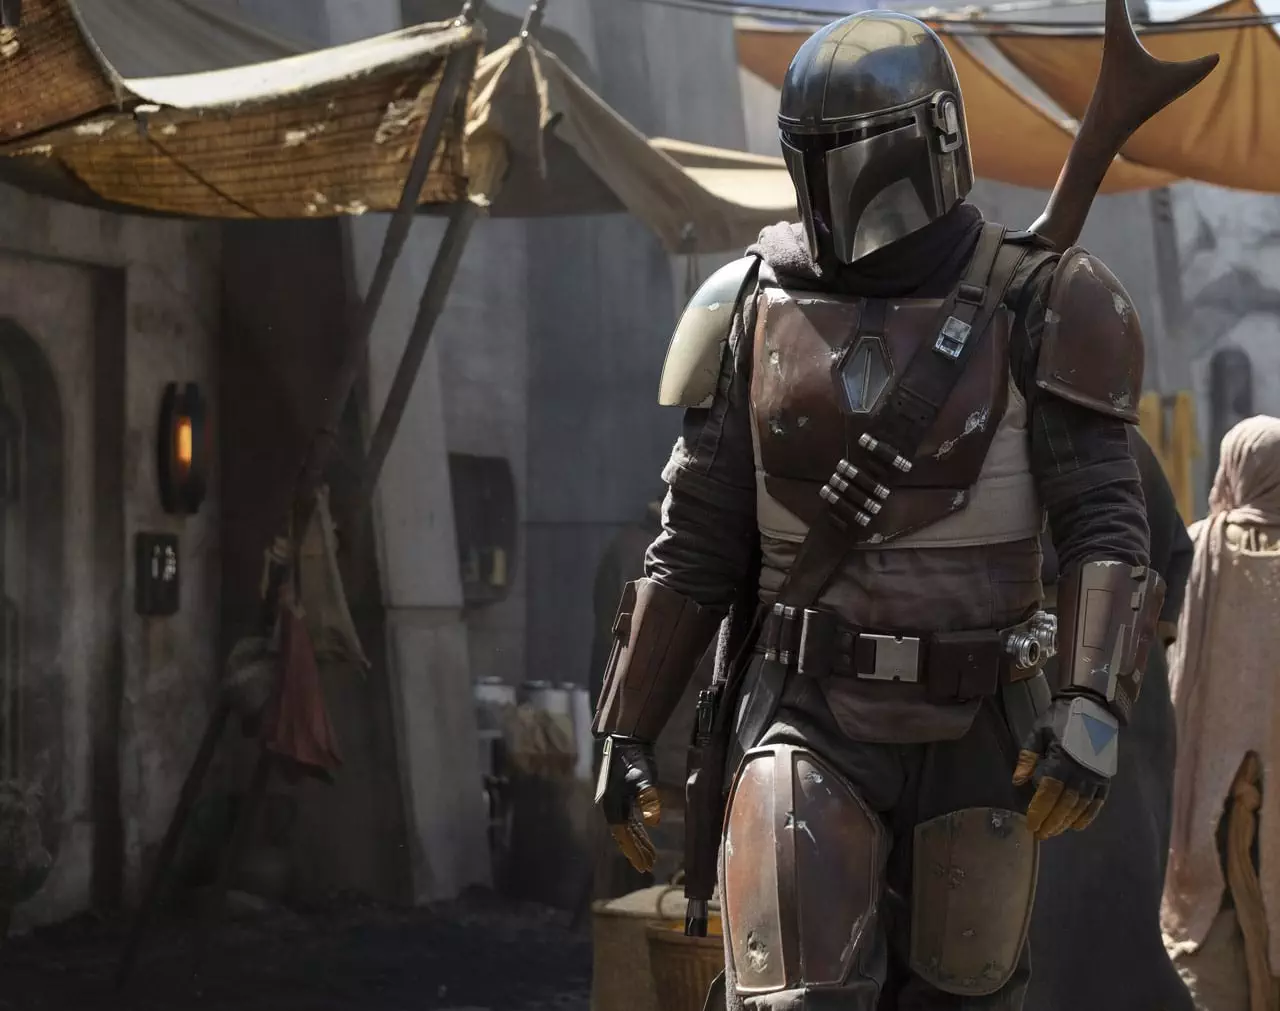 Disney's New Star Wars Series Has a $100 Million Budget